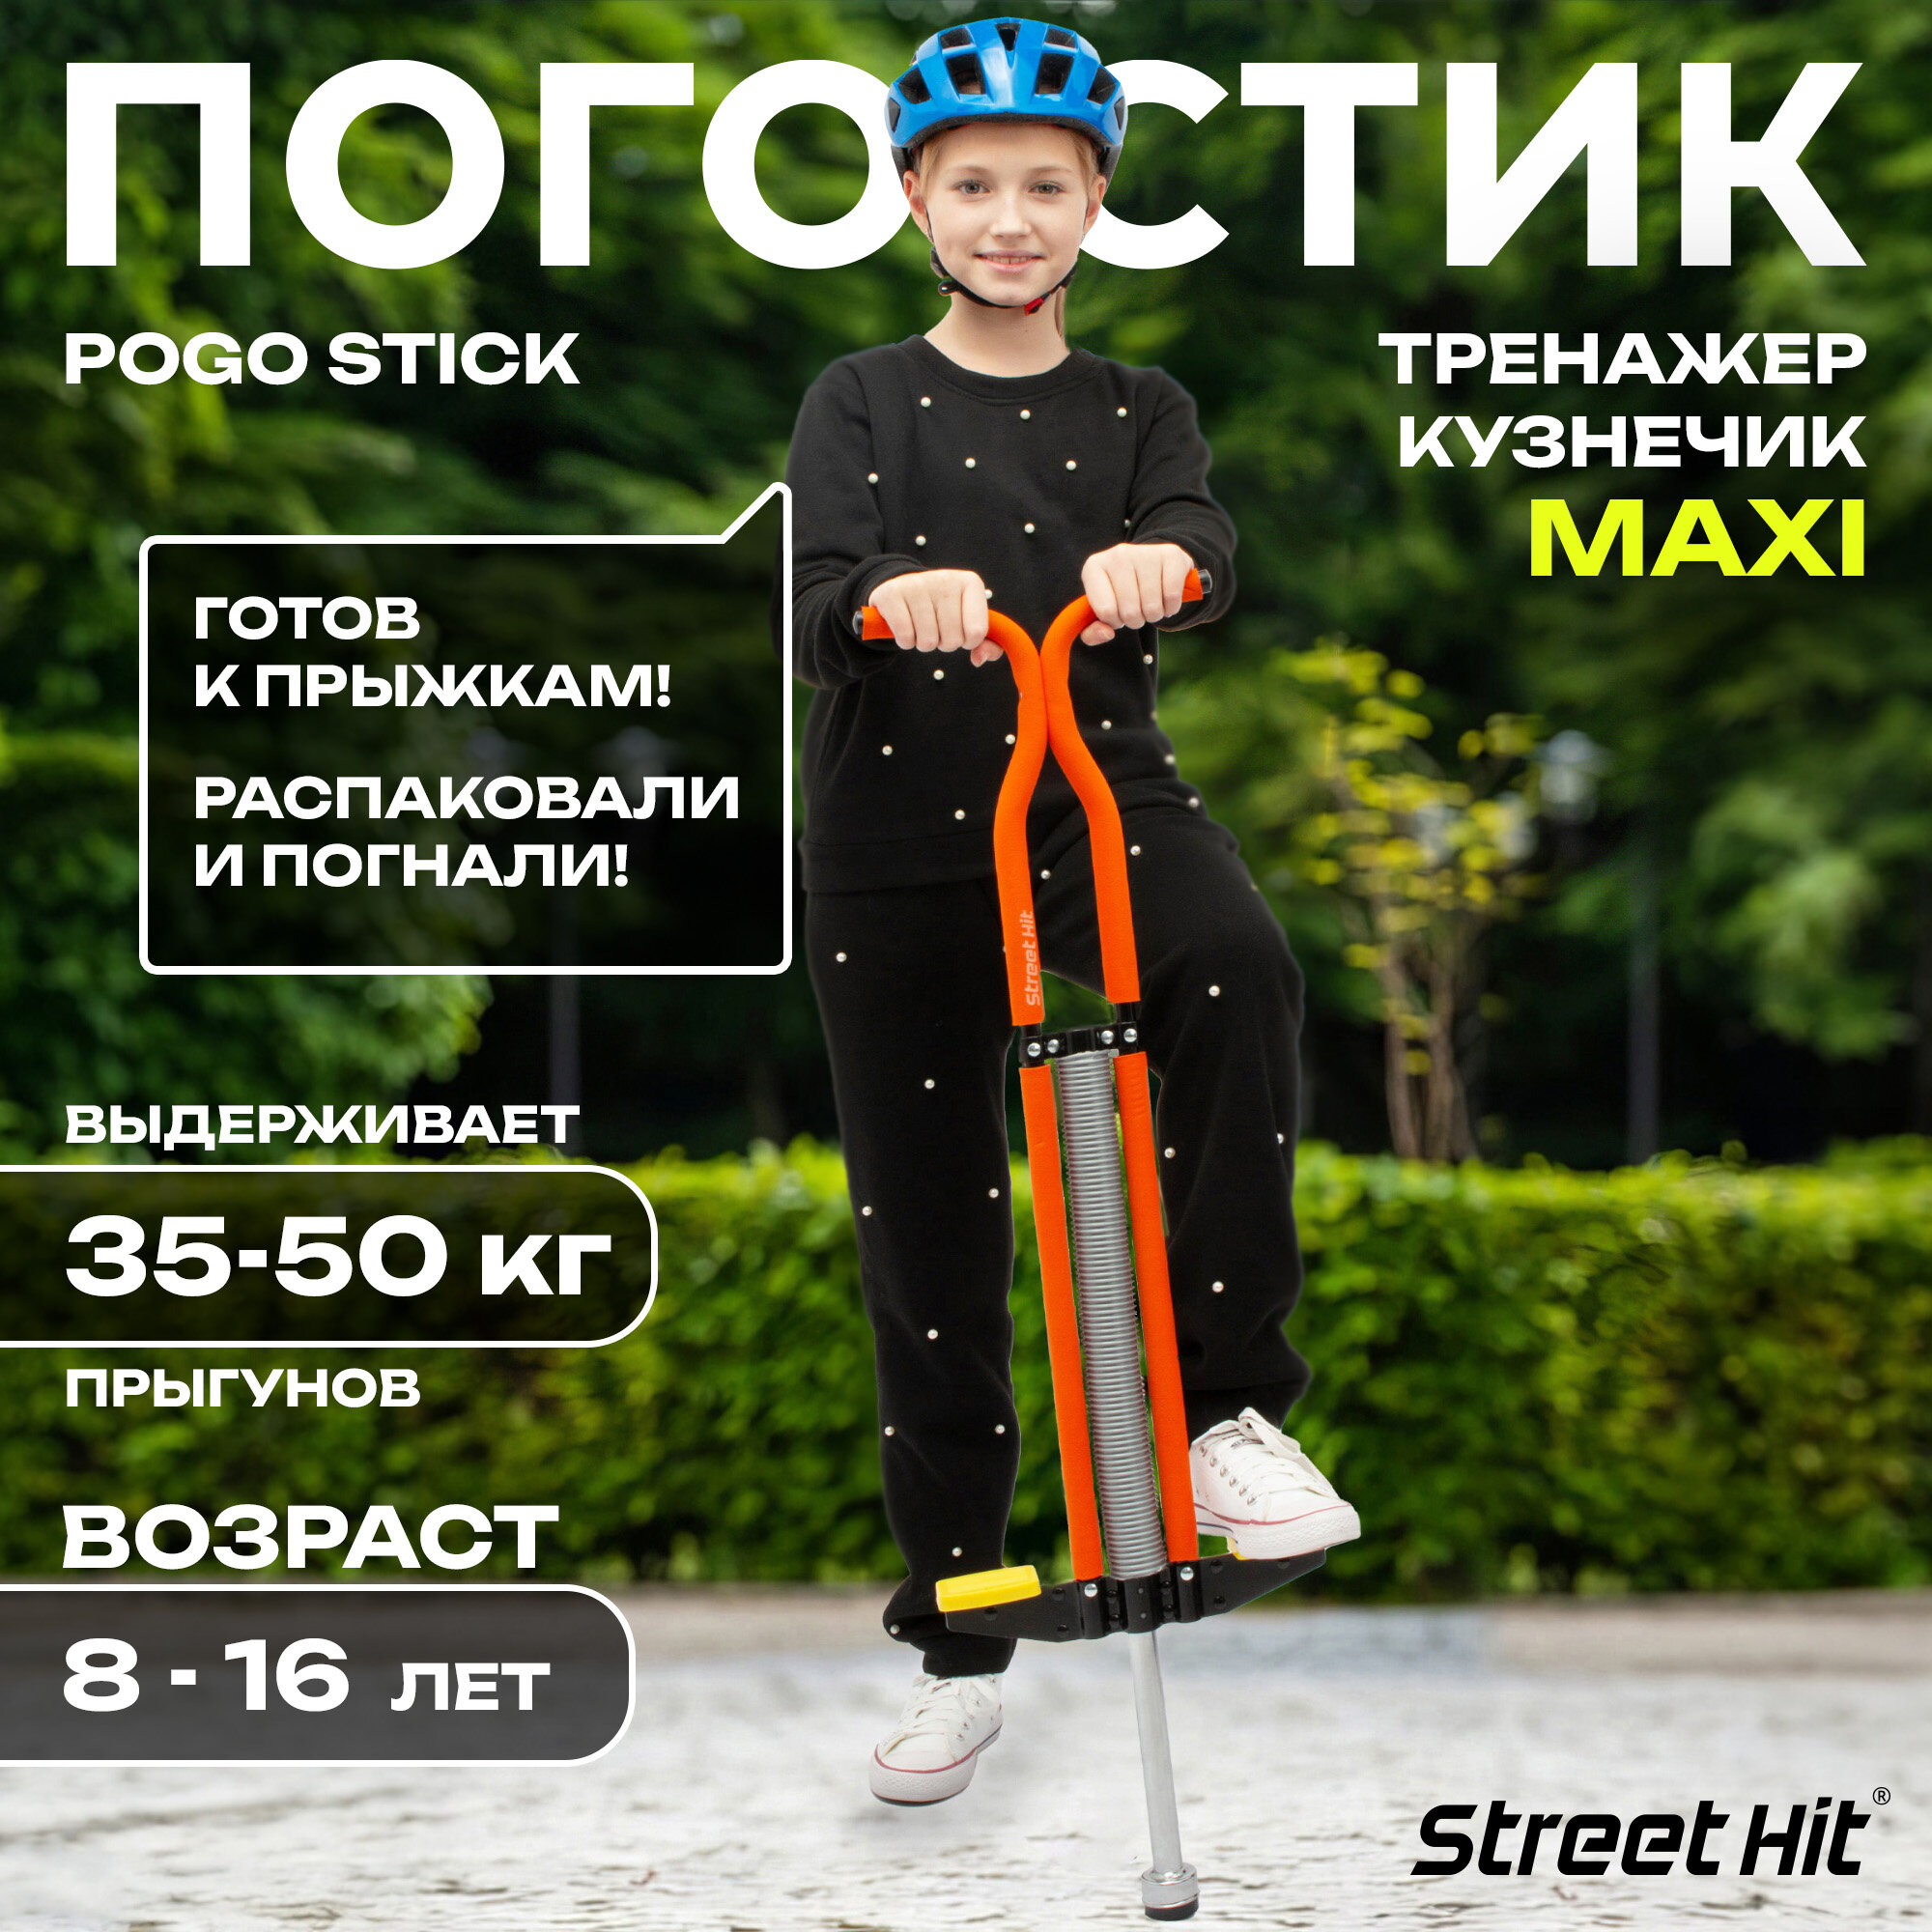 Тренажер-кузнечик Street Hit Pogo Stick Maxi, до 50 кг, оранжевый